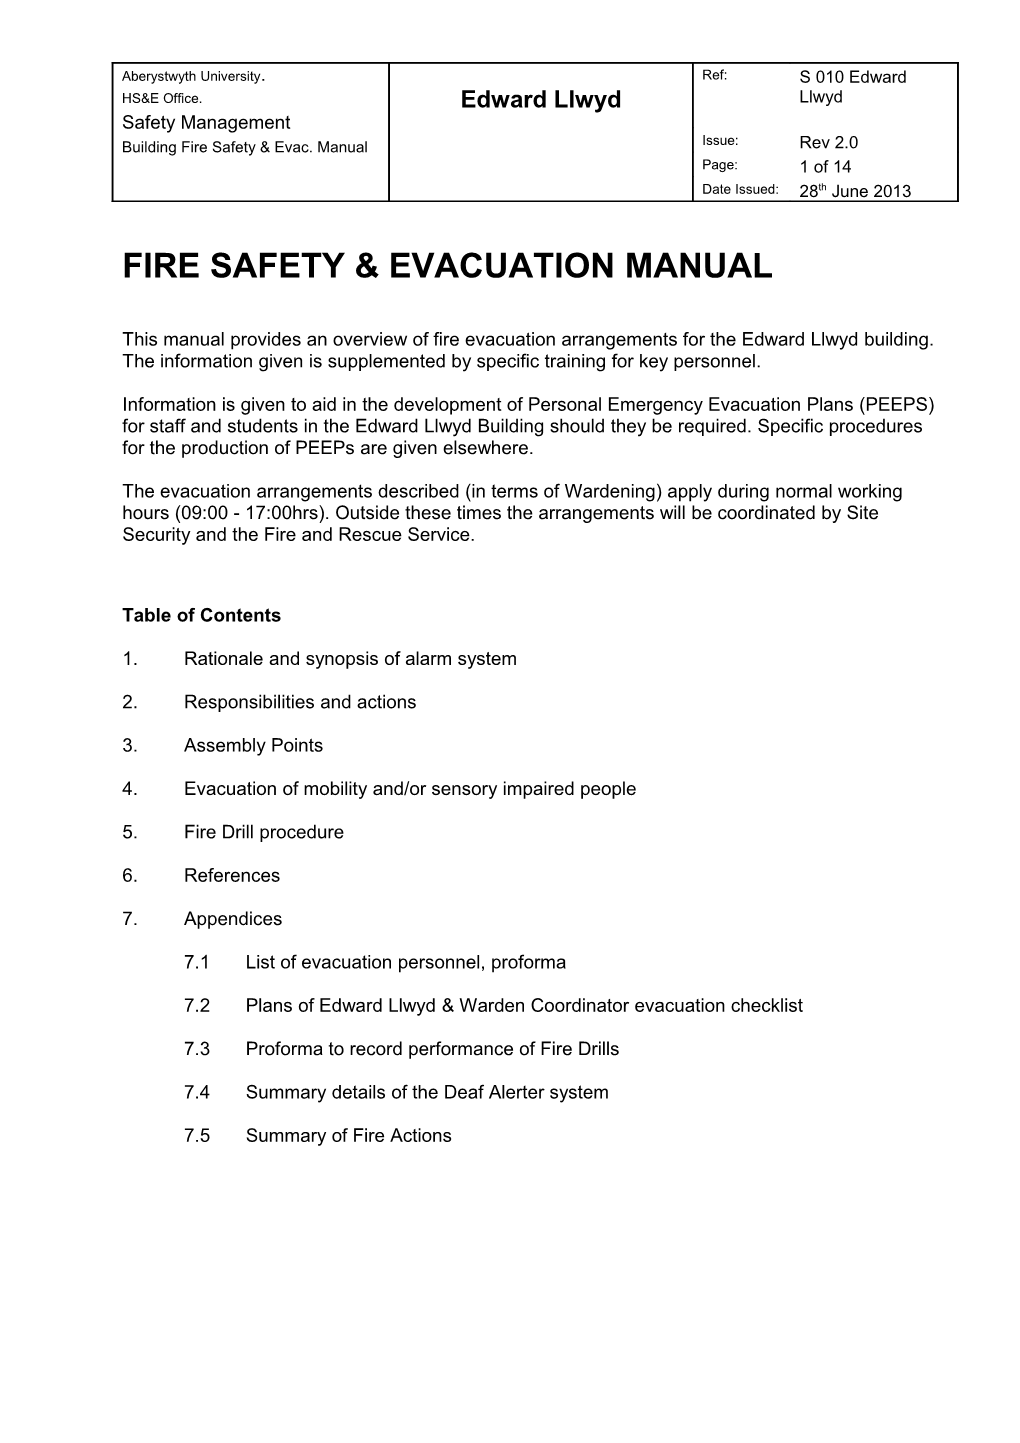 Fire Safety &Evacuation Manual